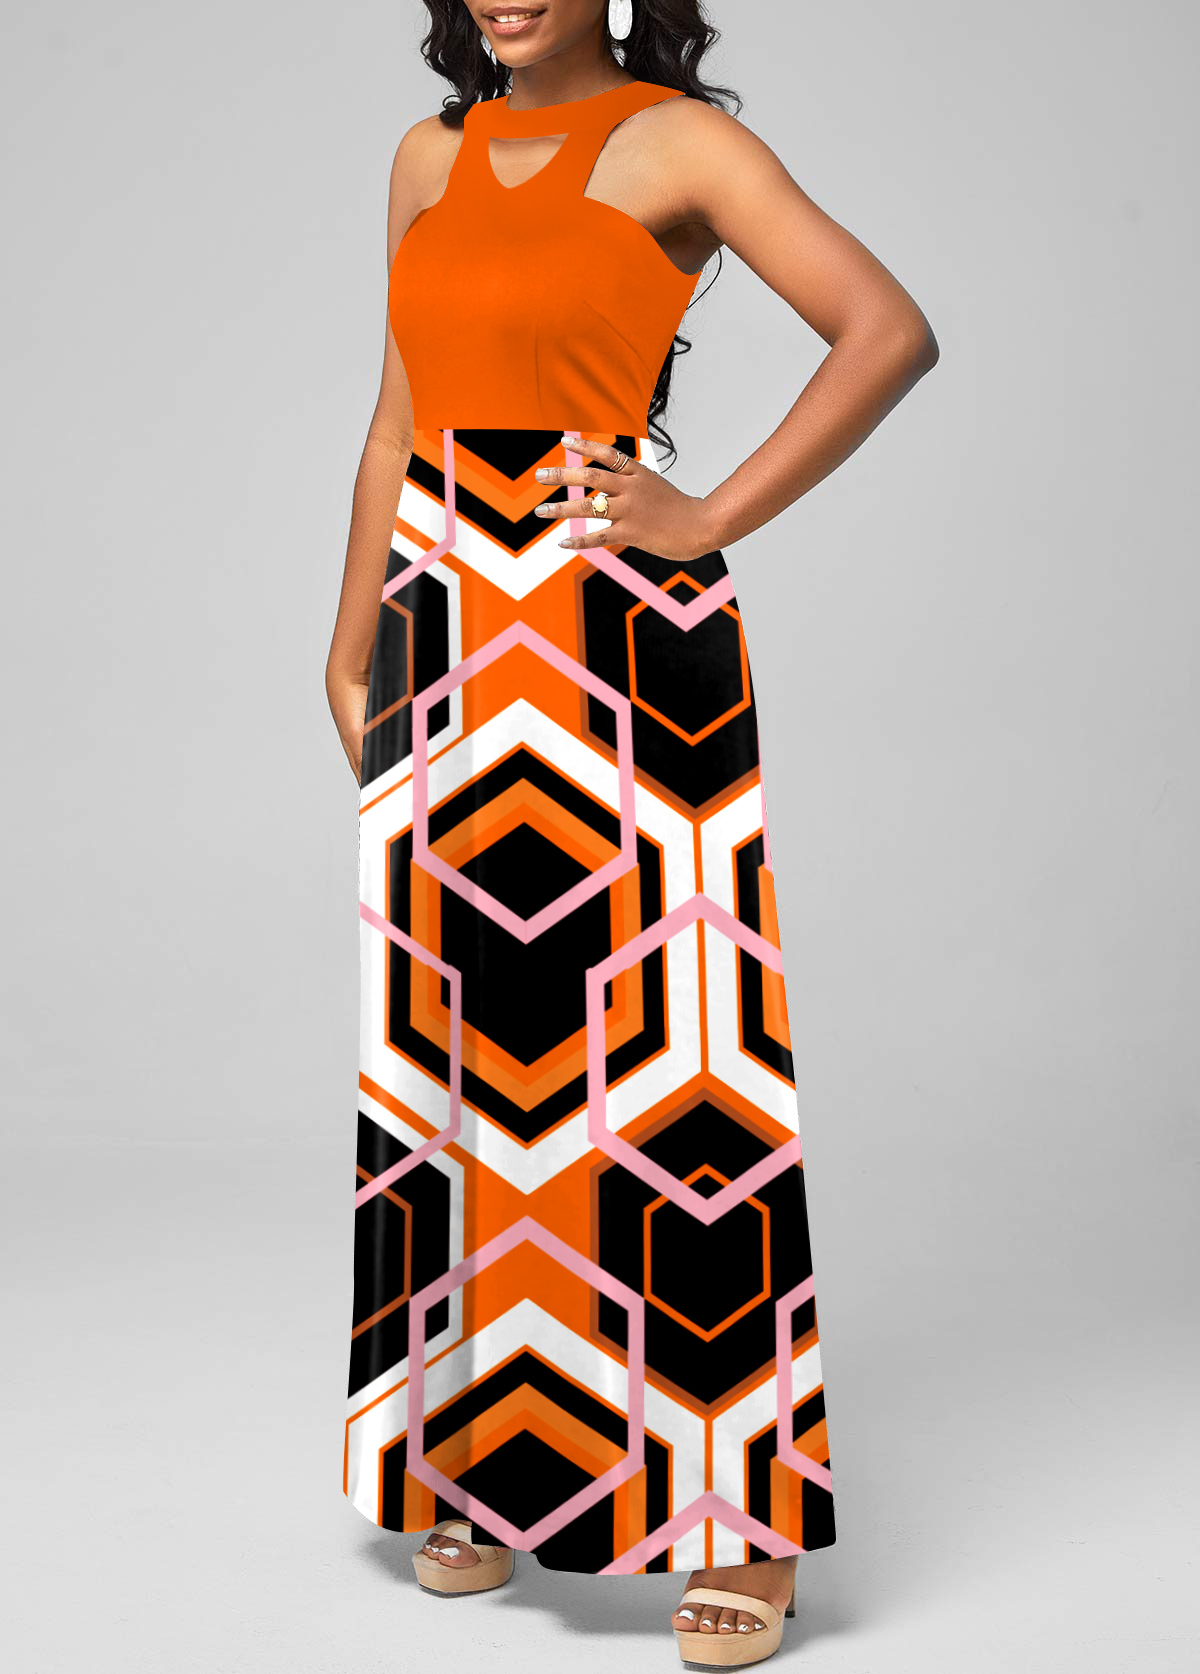 Geometric Print Halter Orange Maxi Dress